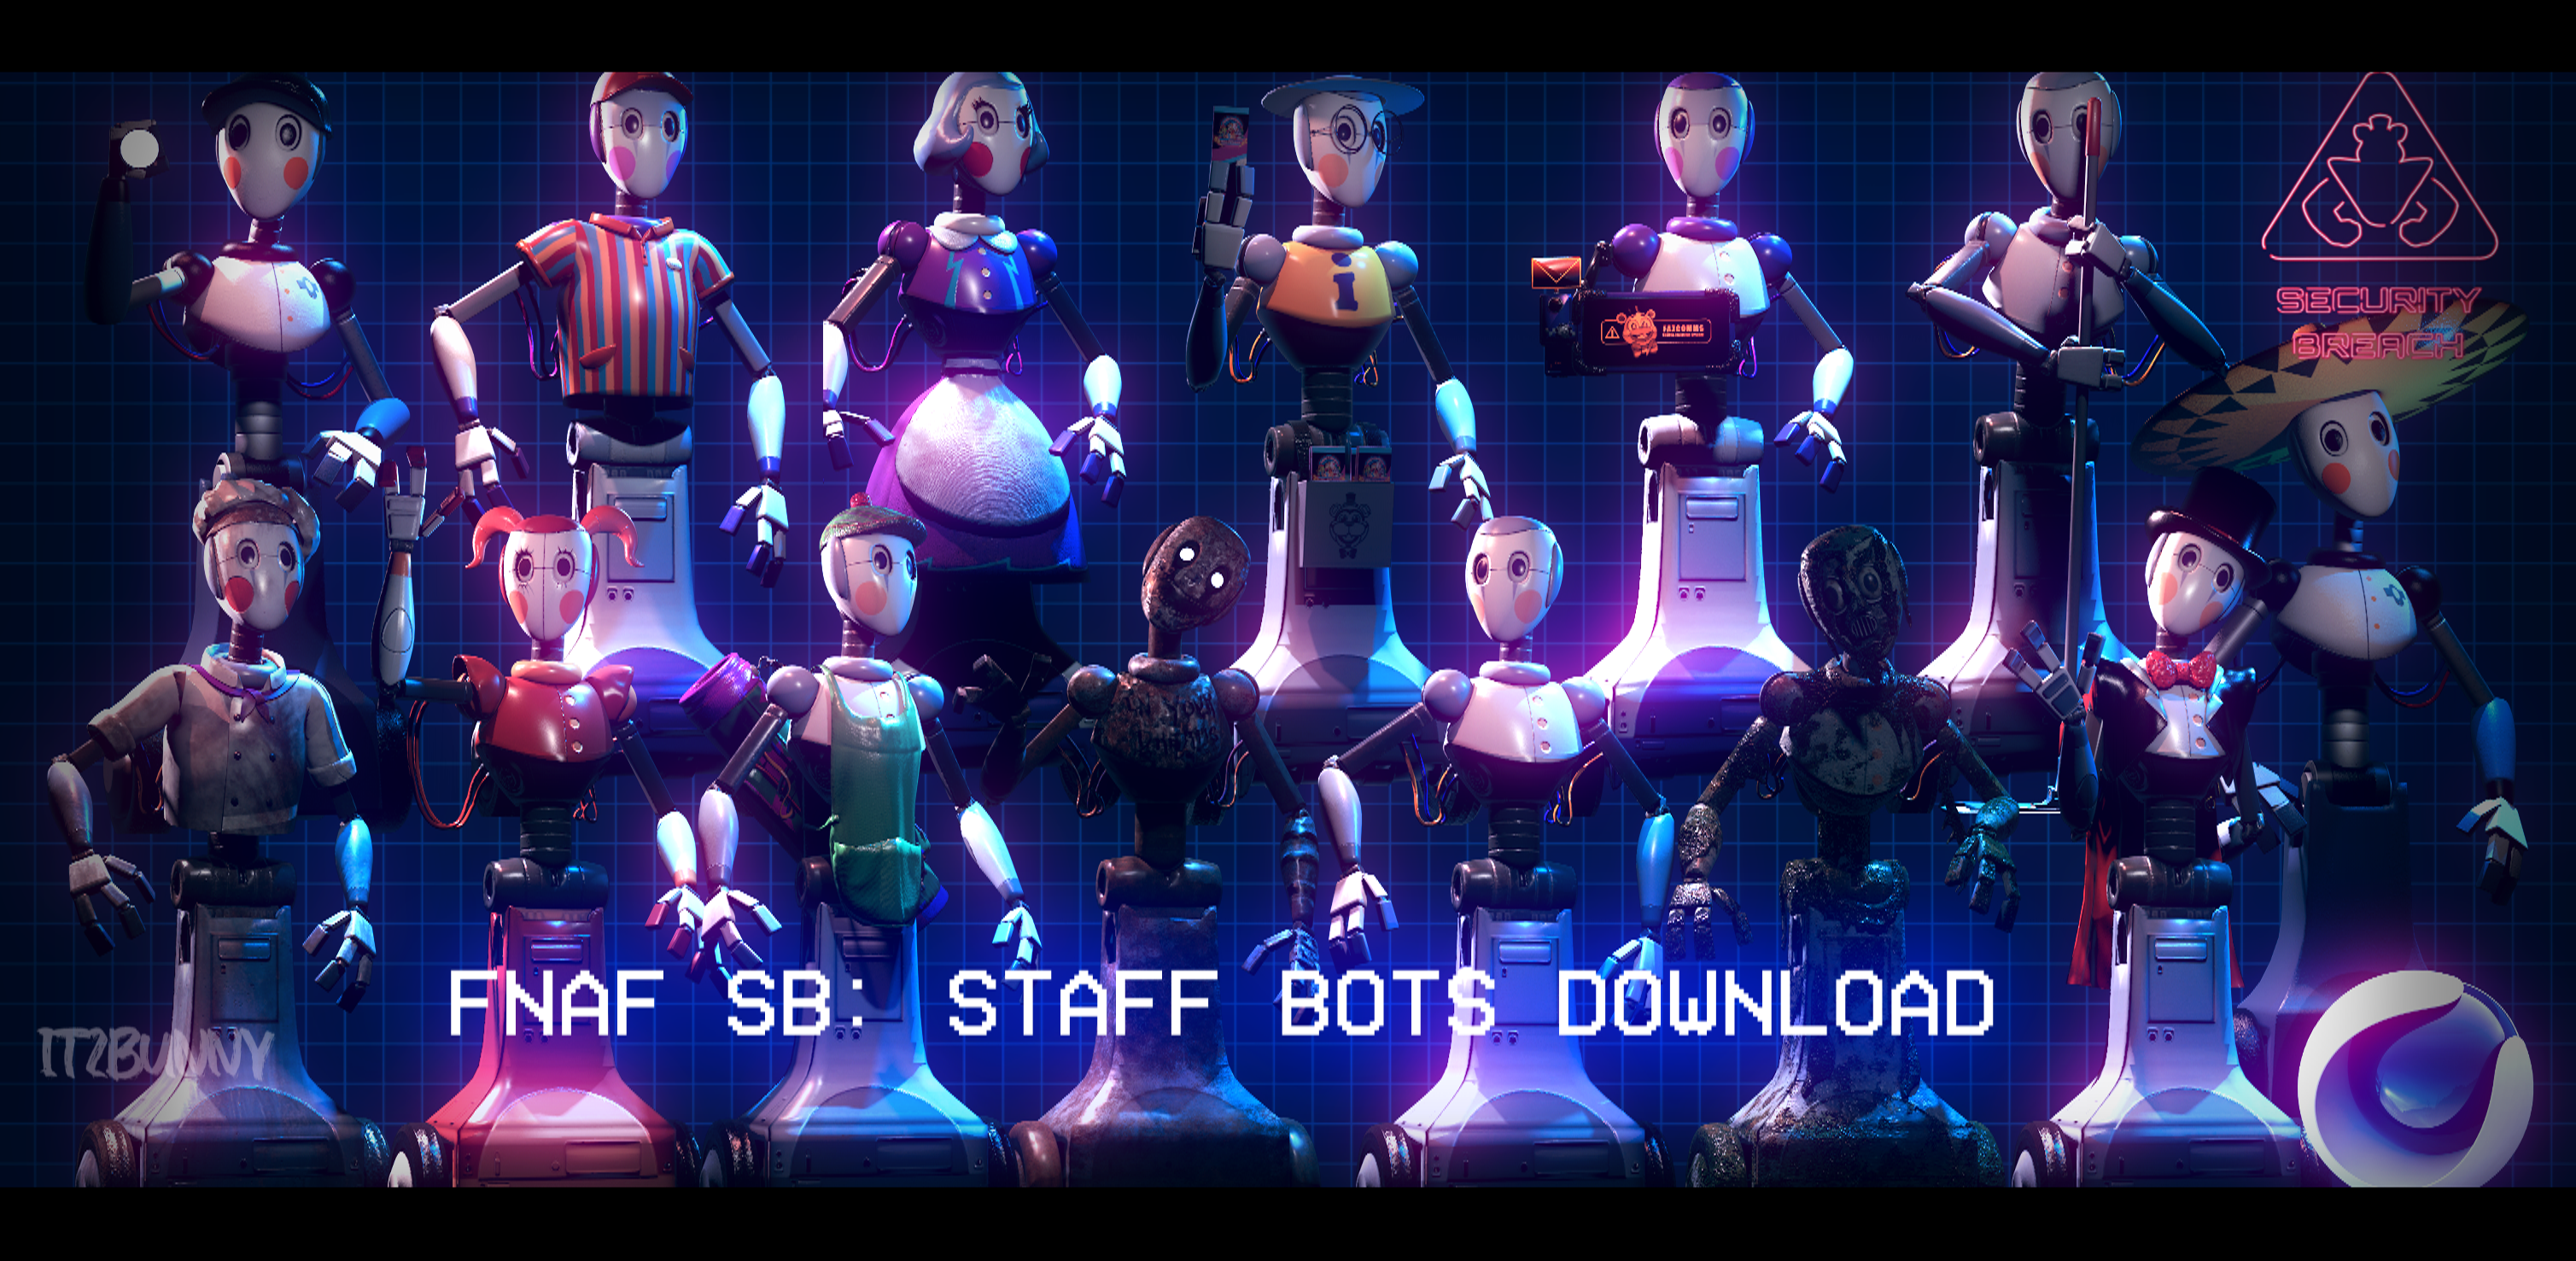 C4D-R19] FNaF SB STAFF Bots C4D Download!! by Bun-Zai on DeviantArt